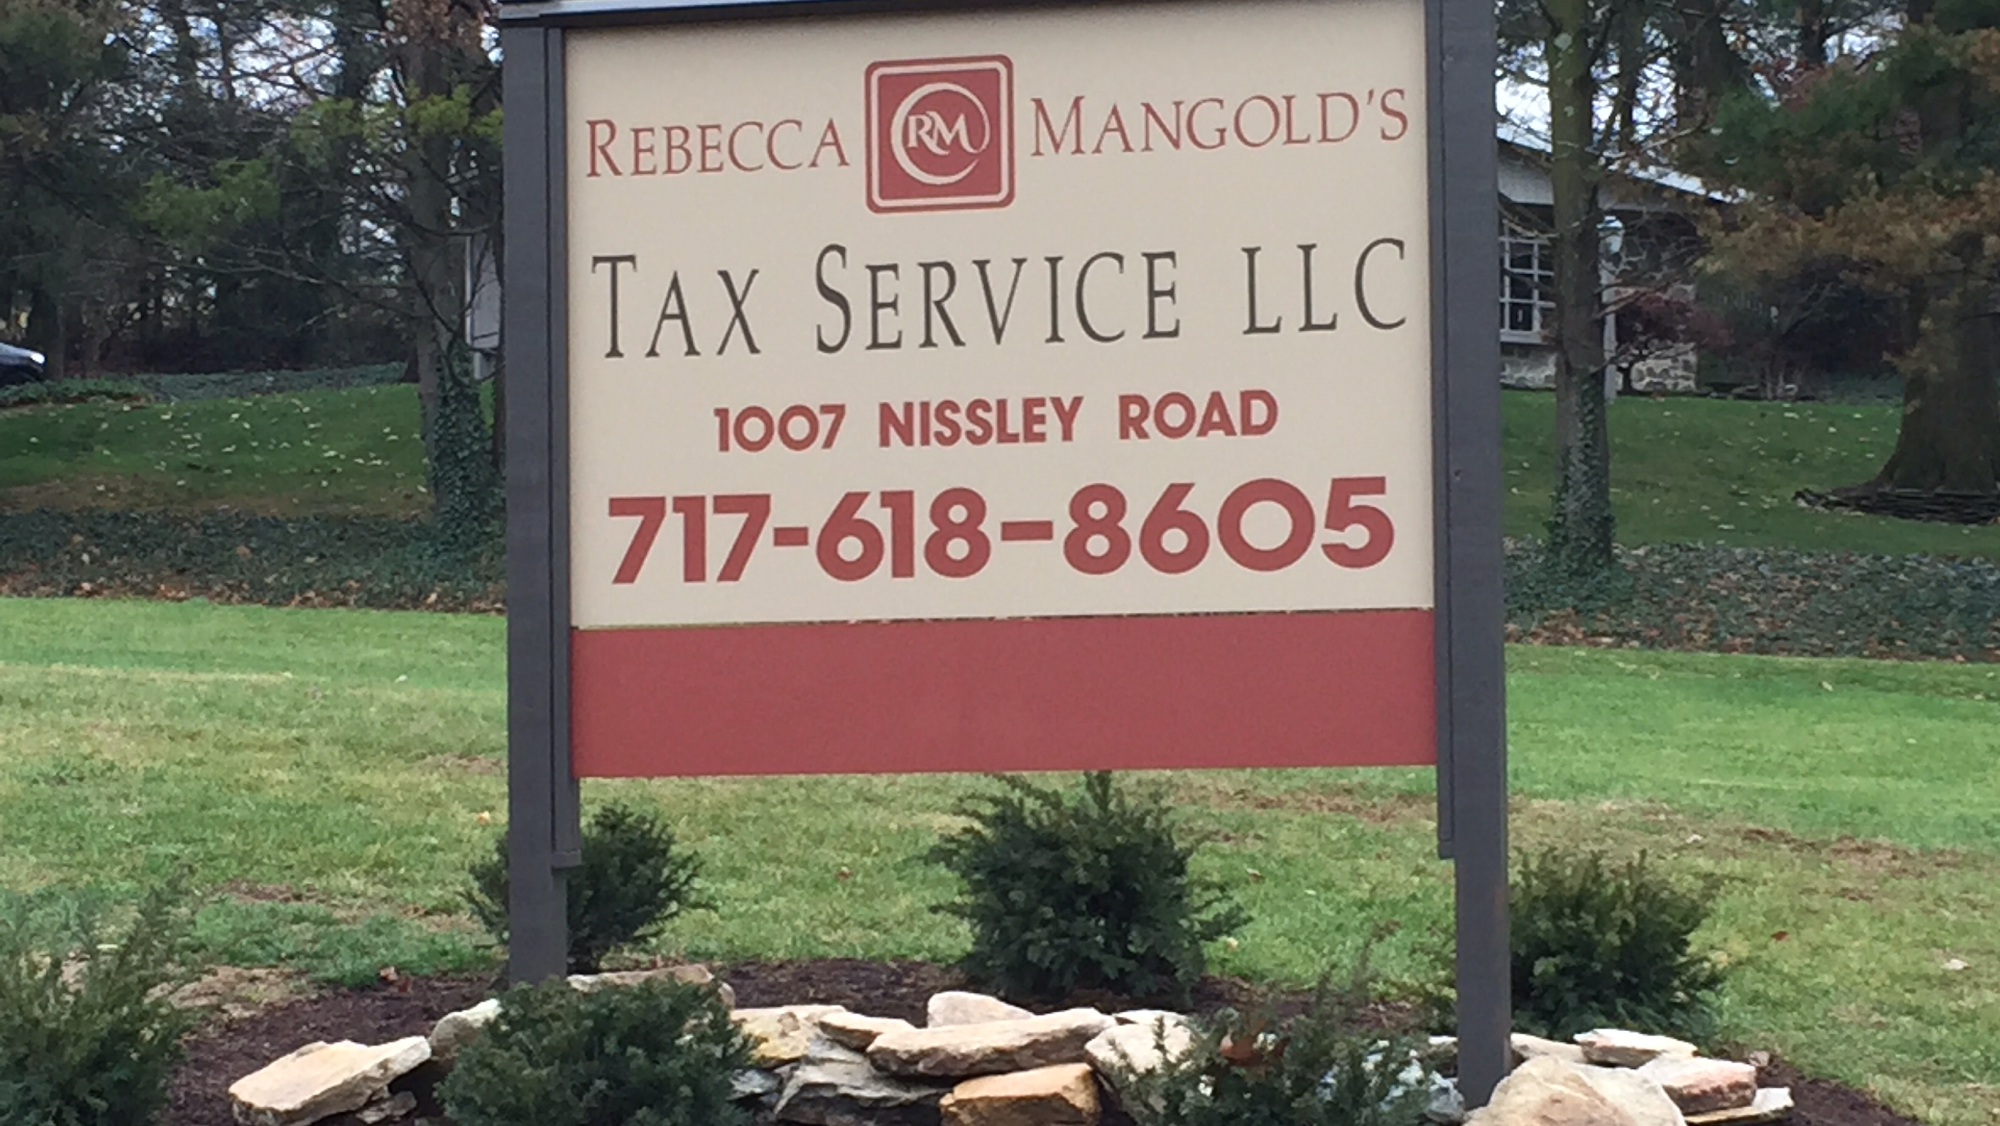 Rebecca Mangold's Tax Service LLC